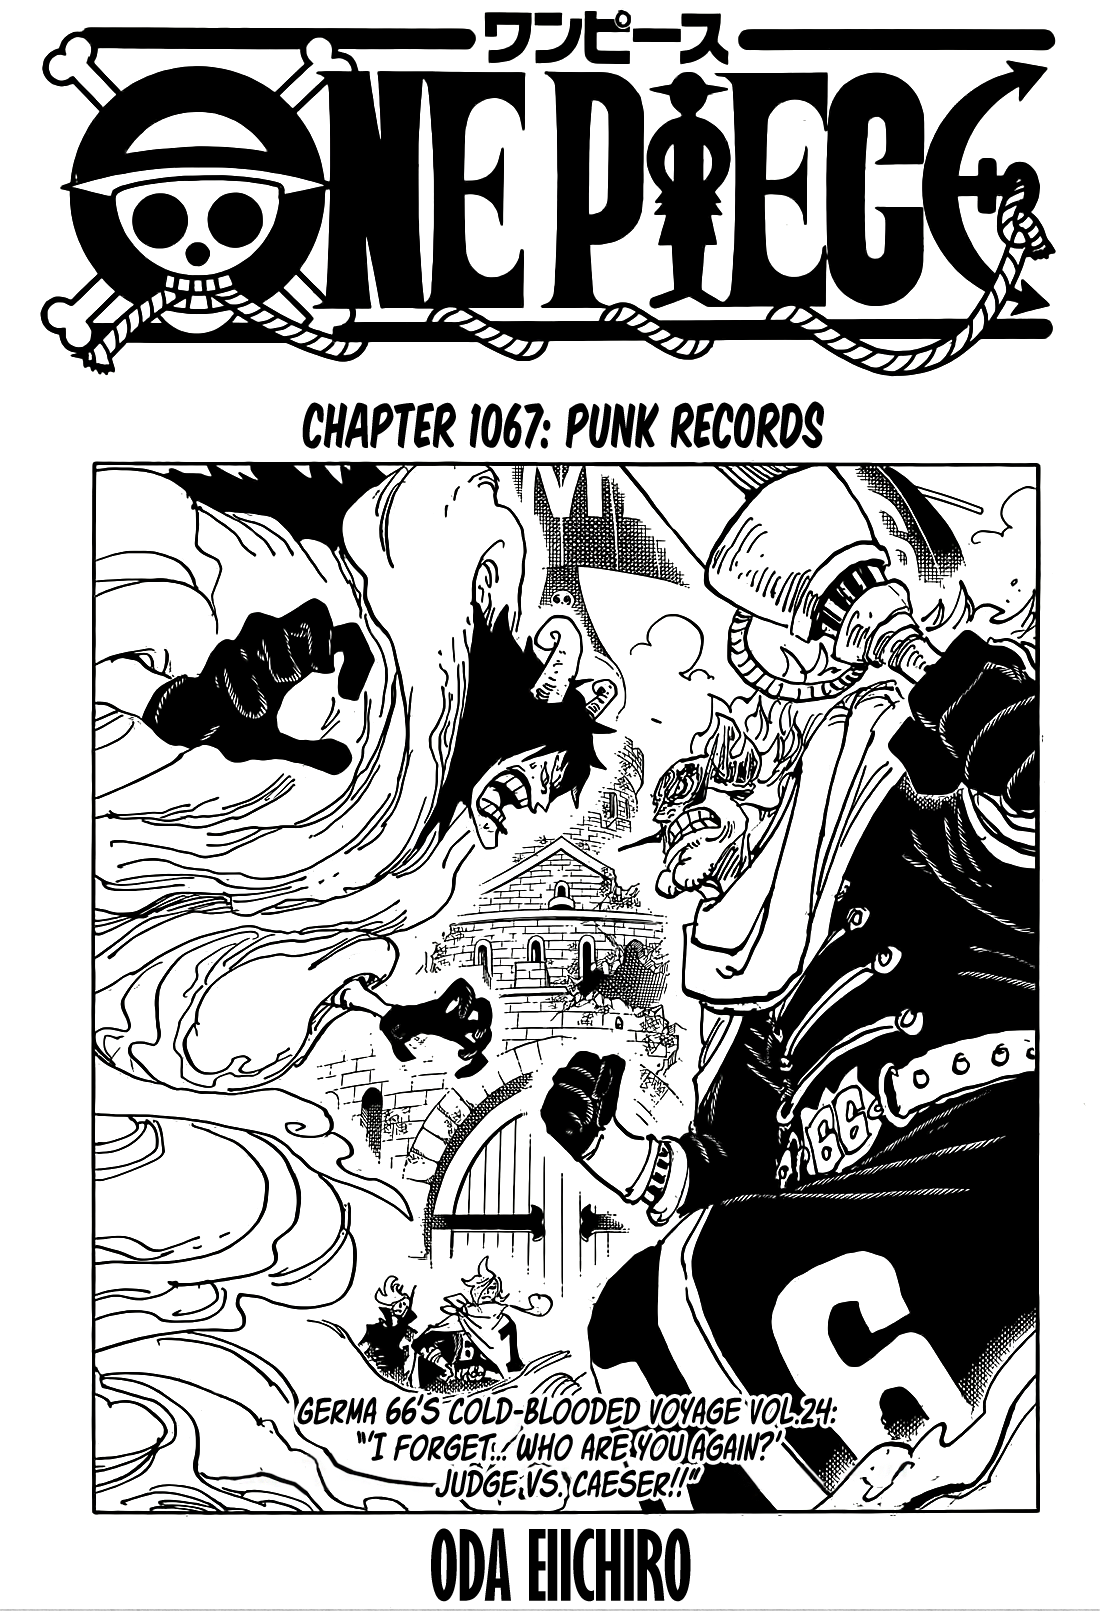 One Piece Capítulo 1034 - Manga Online